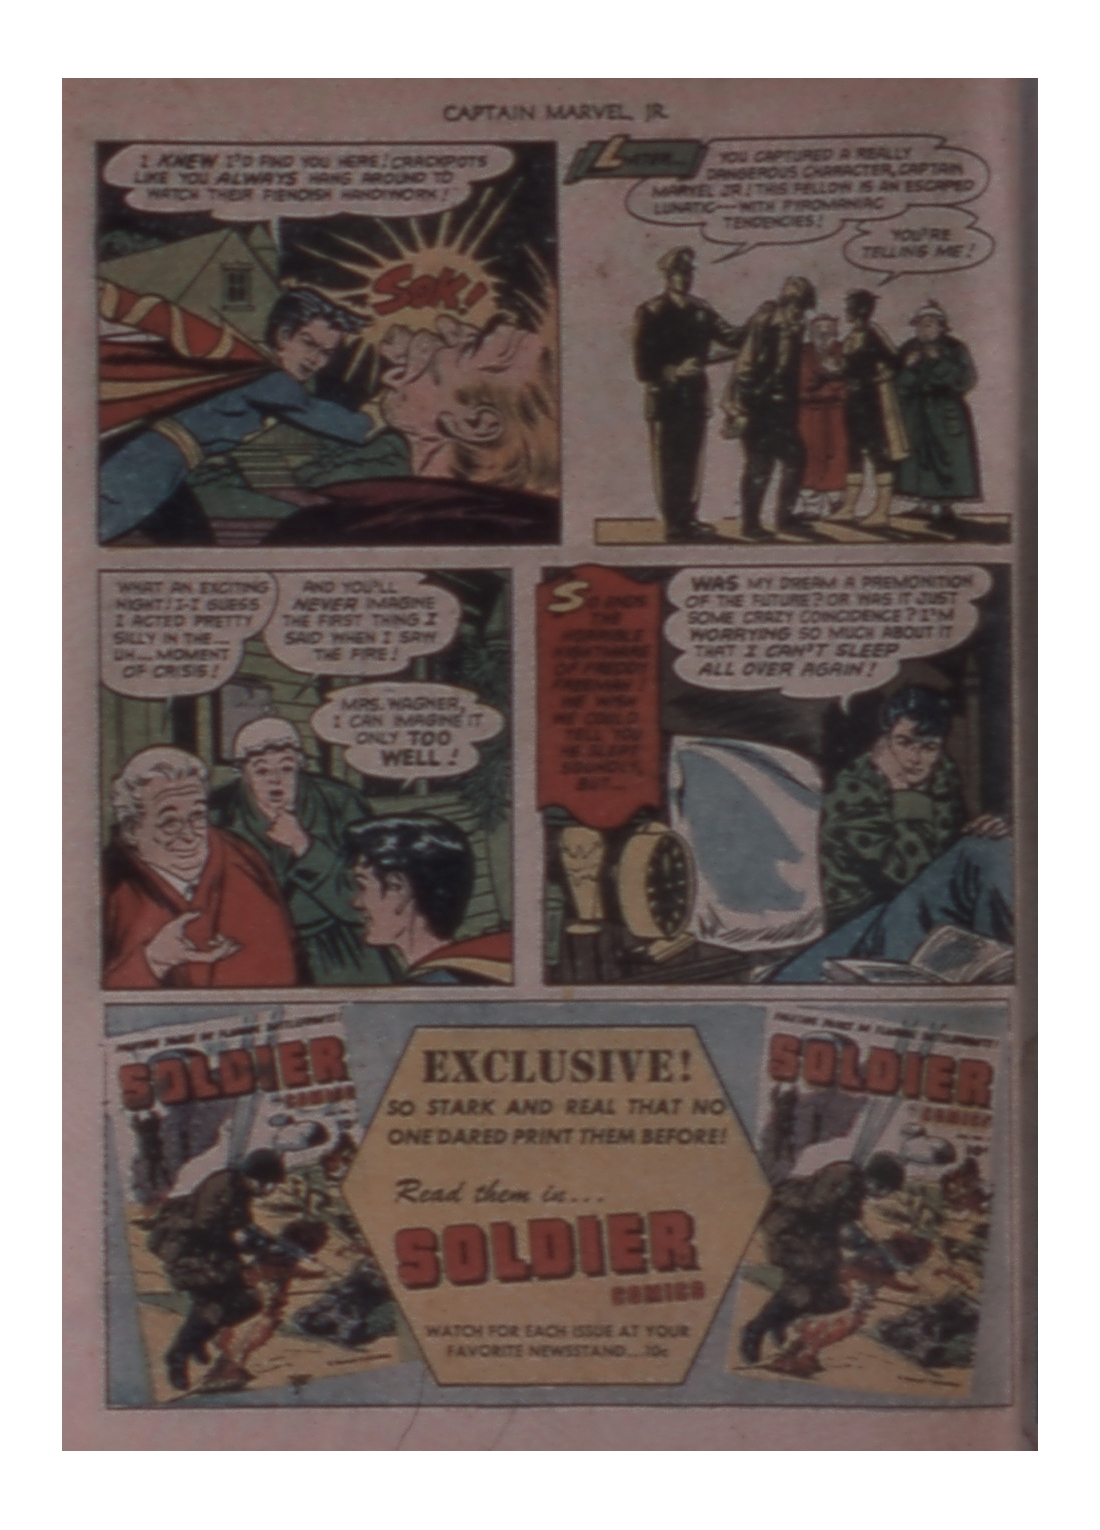 Read online Captain Marvel, Jr. comic -  Issue #109 - 34